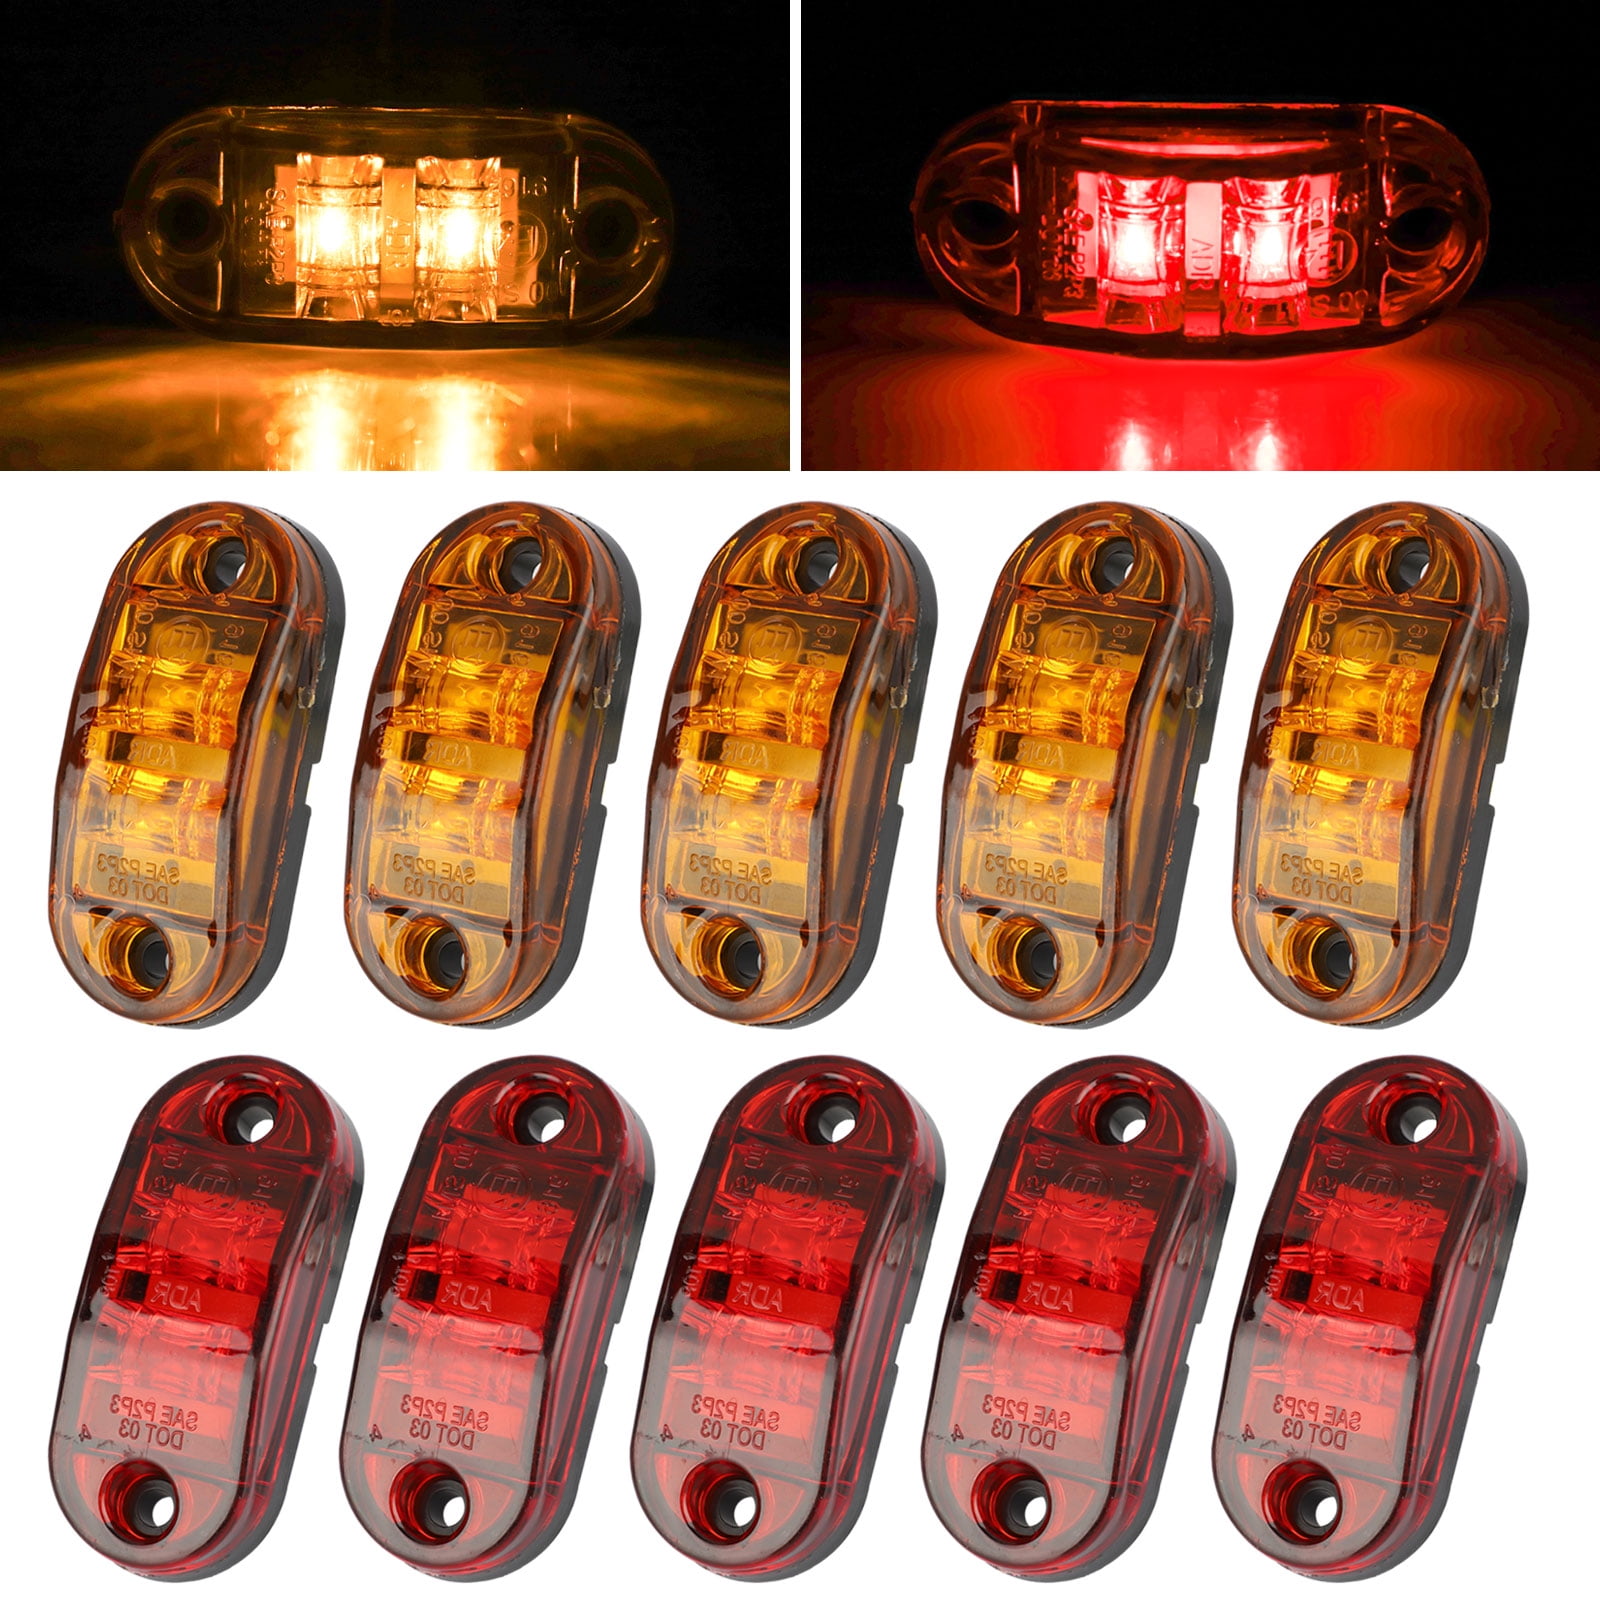 6 LED Auto Car Truck Trailer Side Marker Indicators Light Lamp 12V Super Bright Light Low Power Consumption Waterproof 